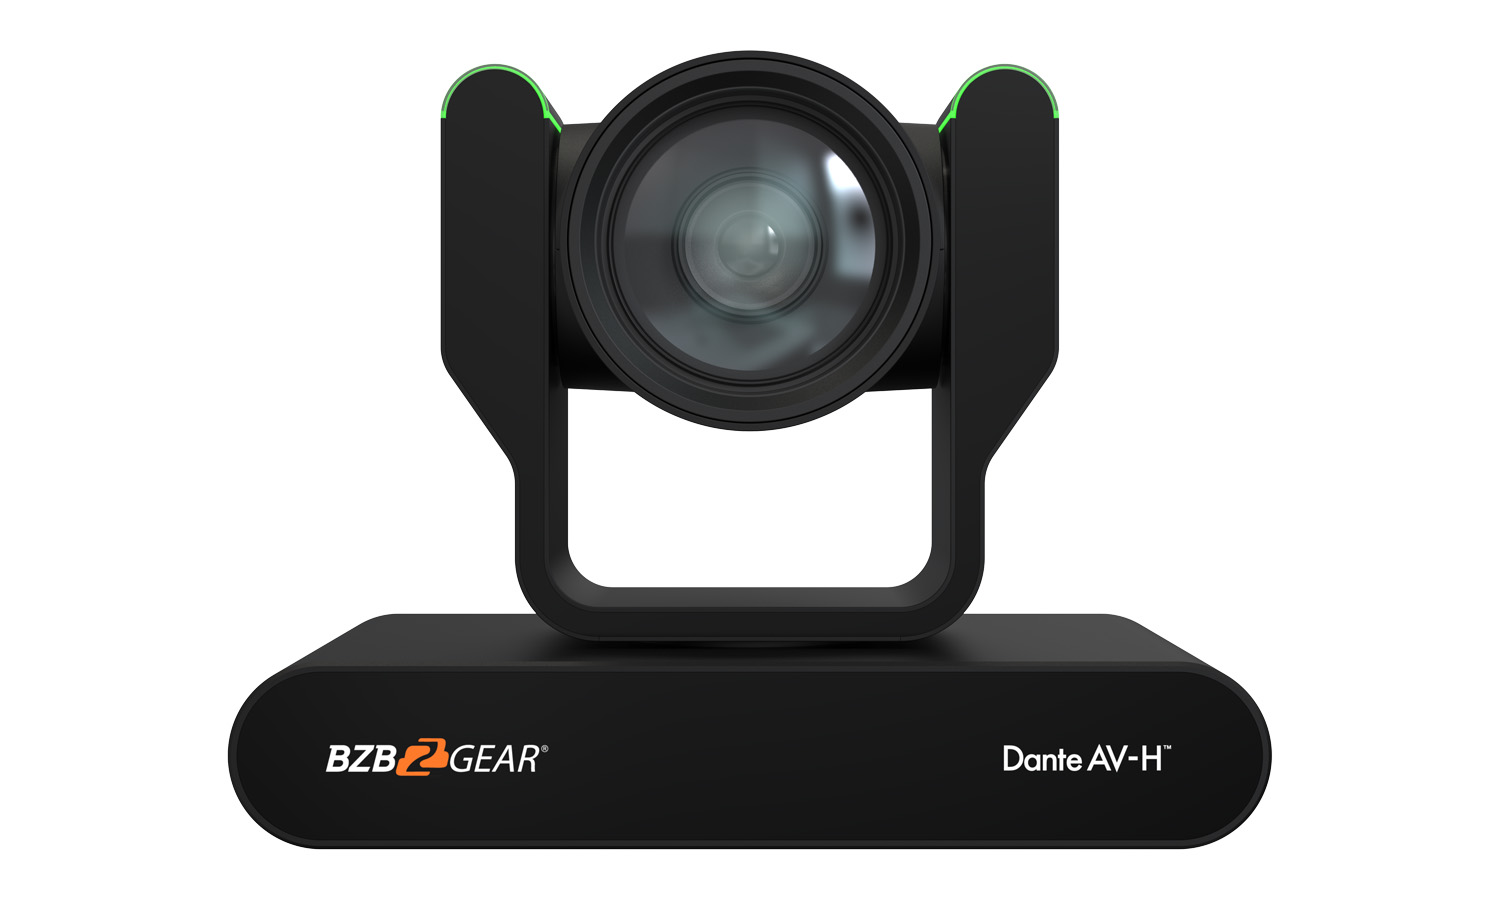 BG-ADAMO-JRDA12X-B 12X 1080P AUTO TRACKING HDMI/SDI/USB 2.0/USB 3.0/POE/DANTE AV-H Live Streaming PTZ Camera with Tally Lights (Black) by BZBGEAR